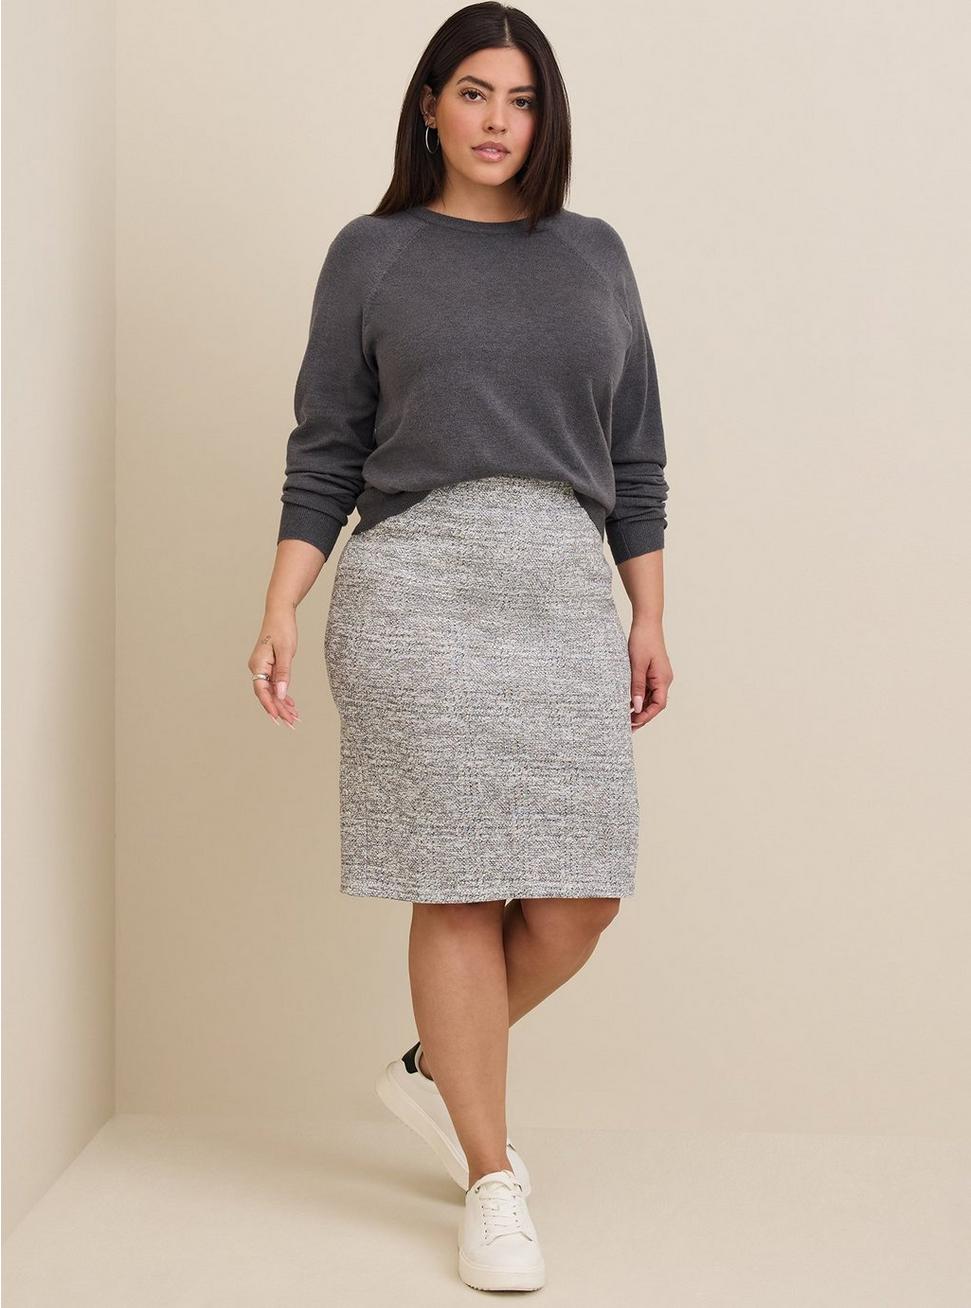 Midi Studio Double Knit Pencil Skirt, HEATHER GREY, hi-res